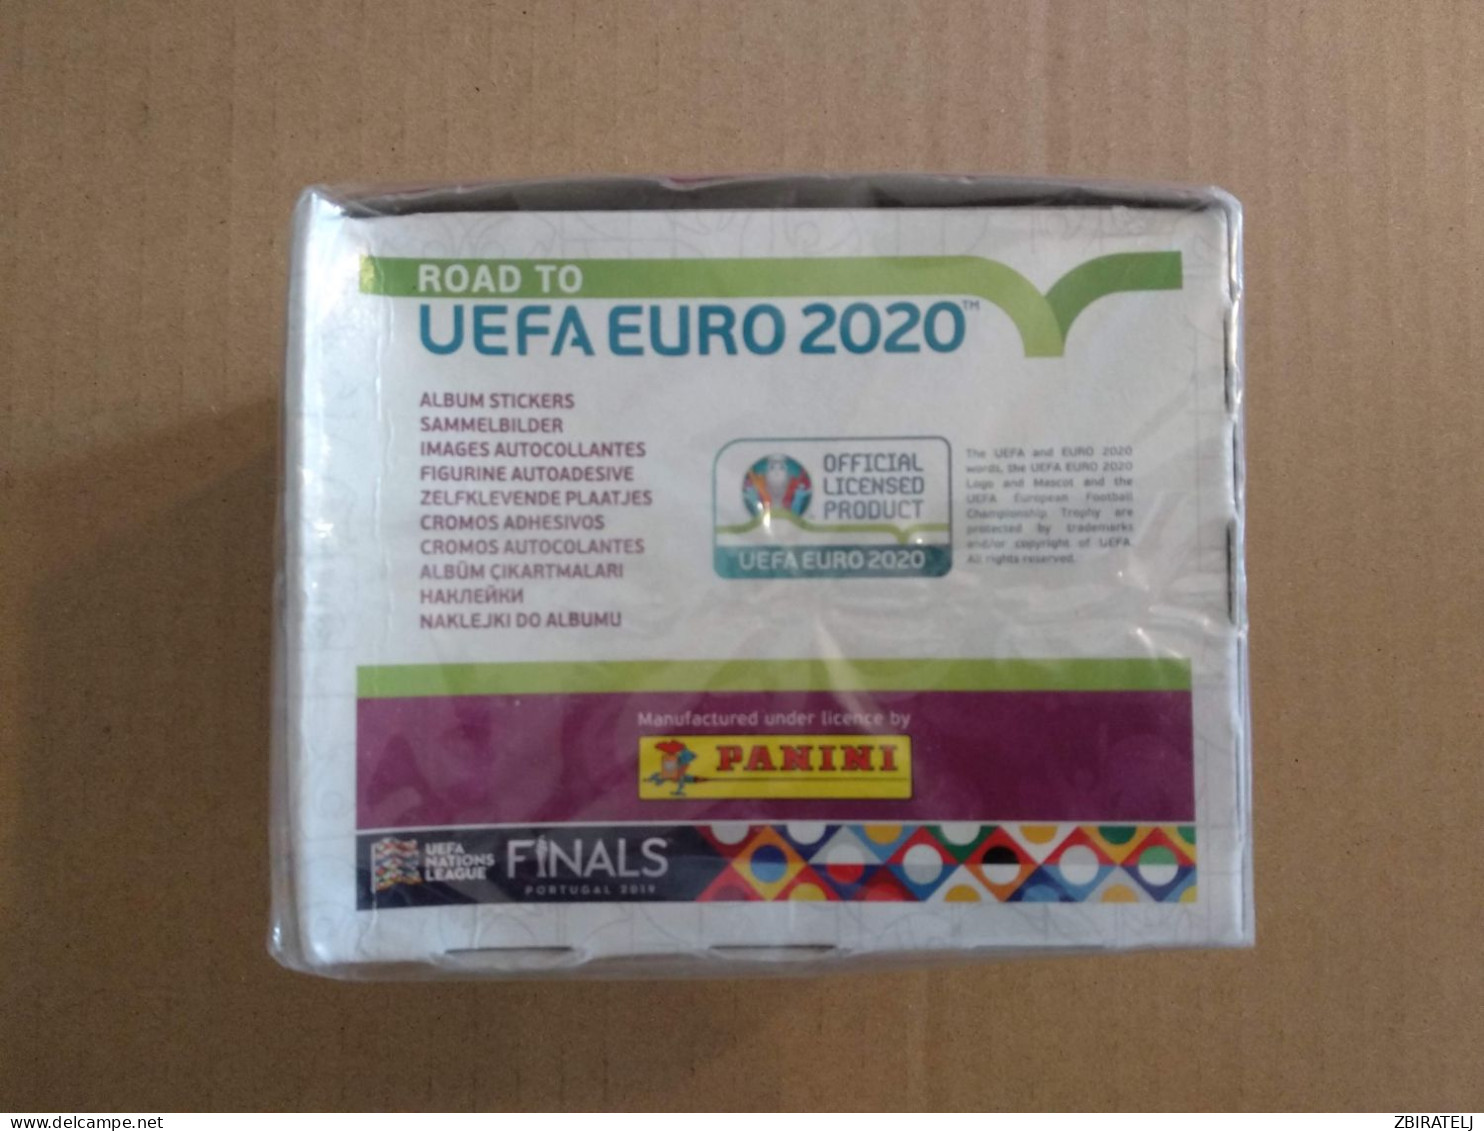 PANINI ROAD TO 2020 UEFA EURO DISPLAY - 50 PACKS - 250 STICKERS - English Edition